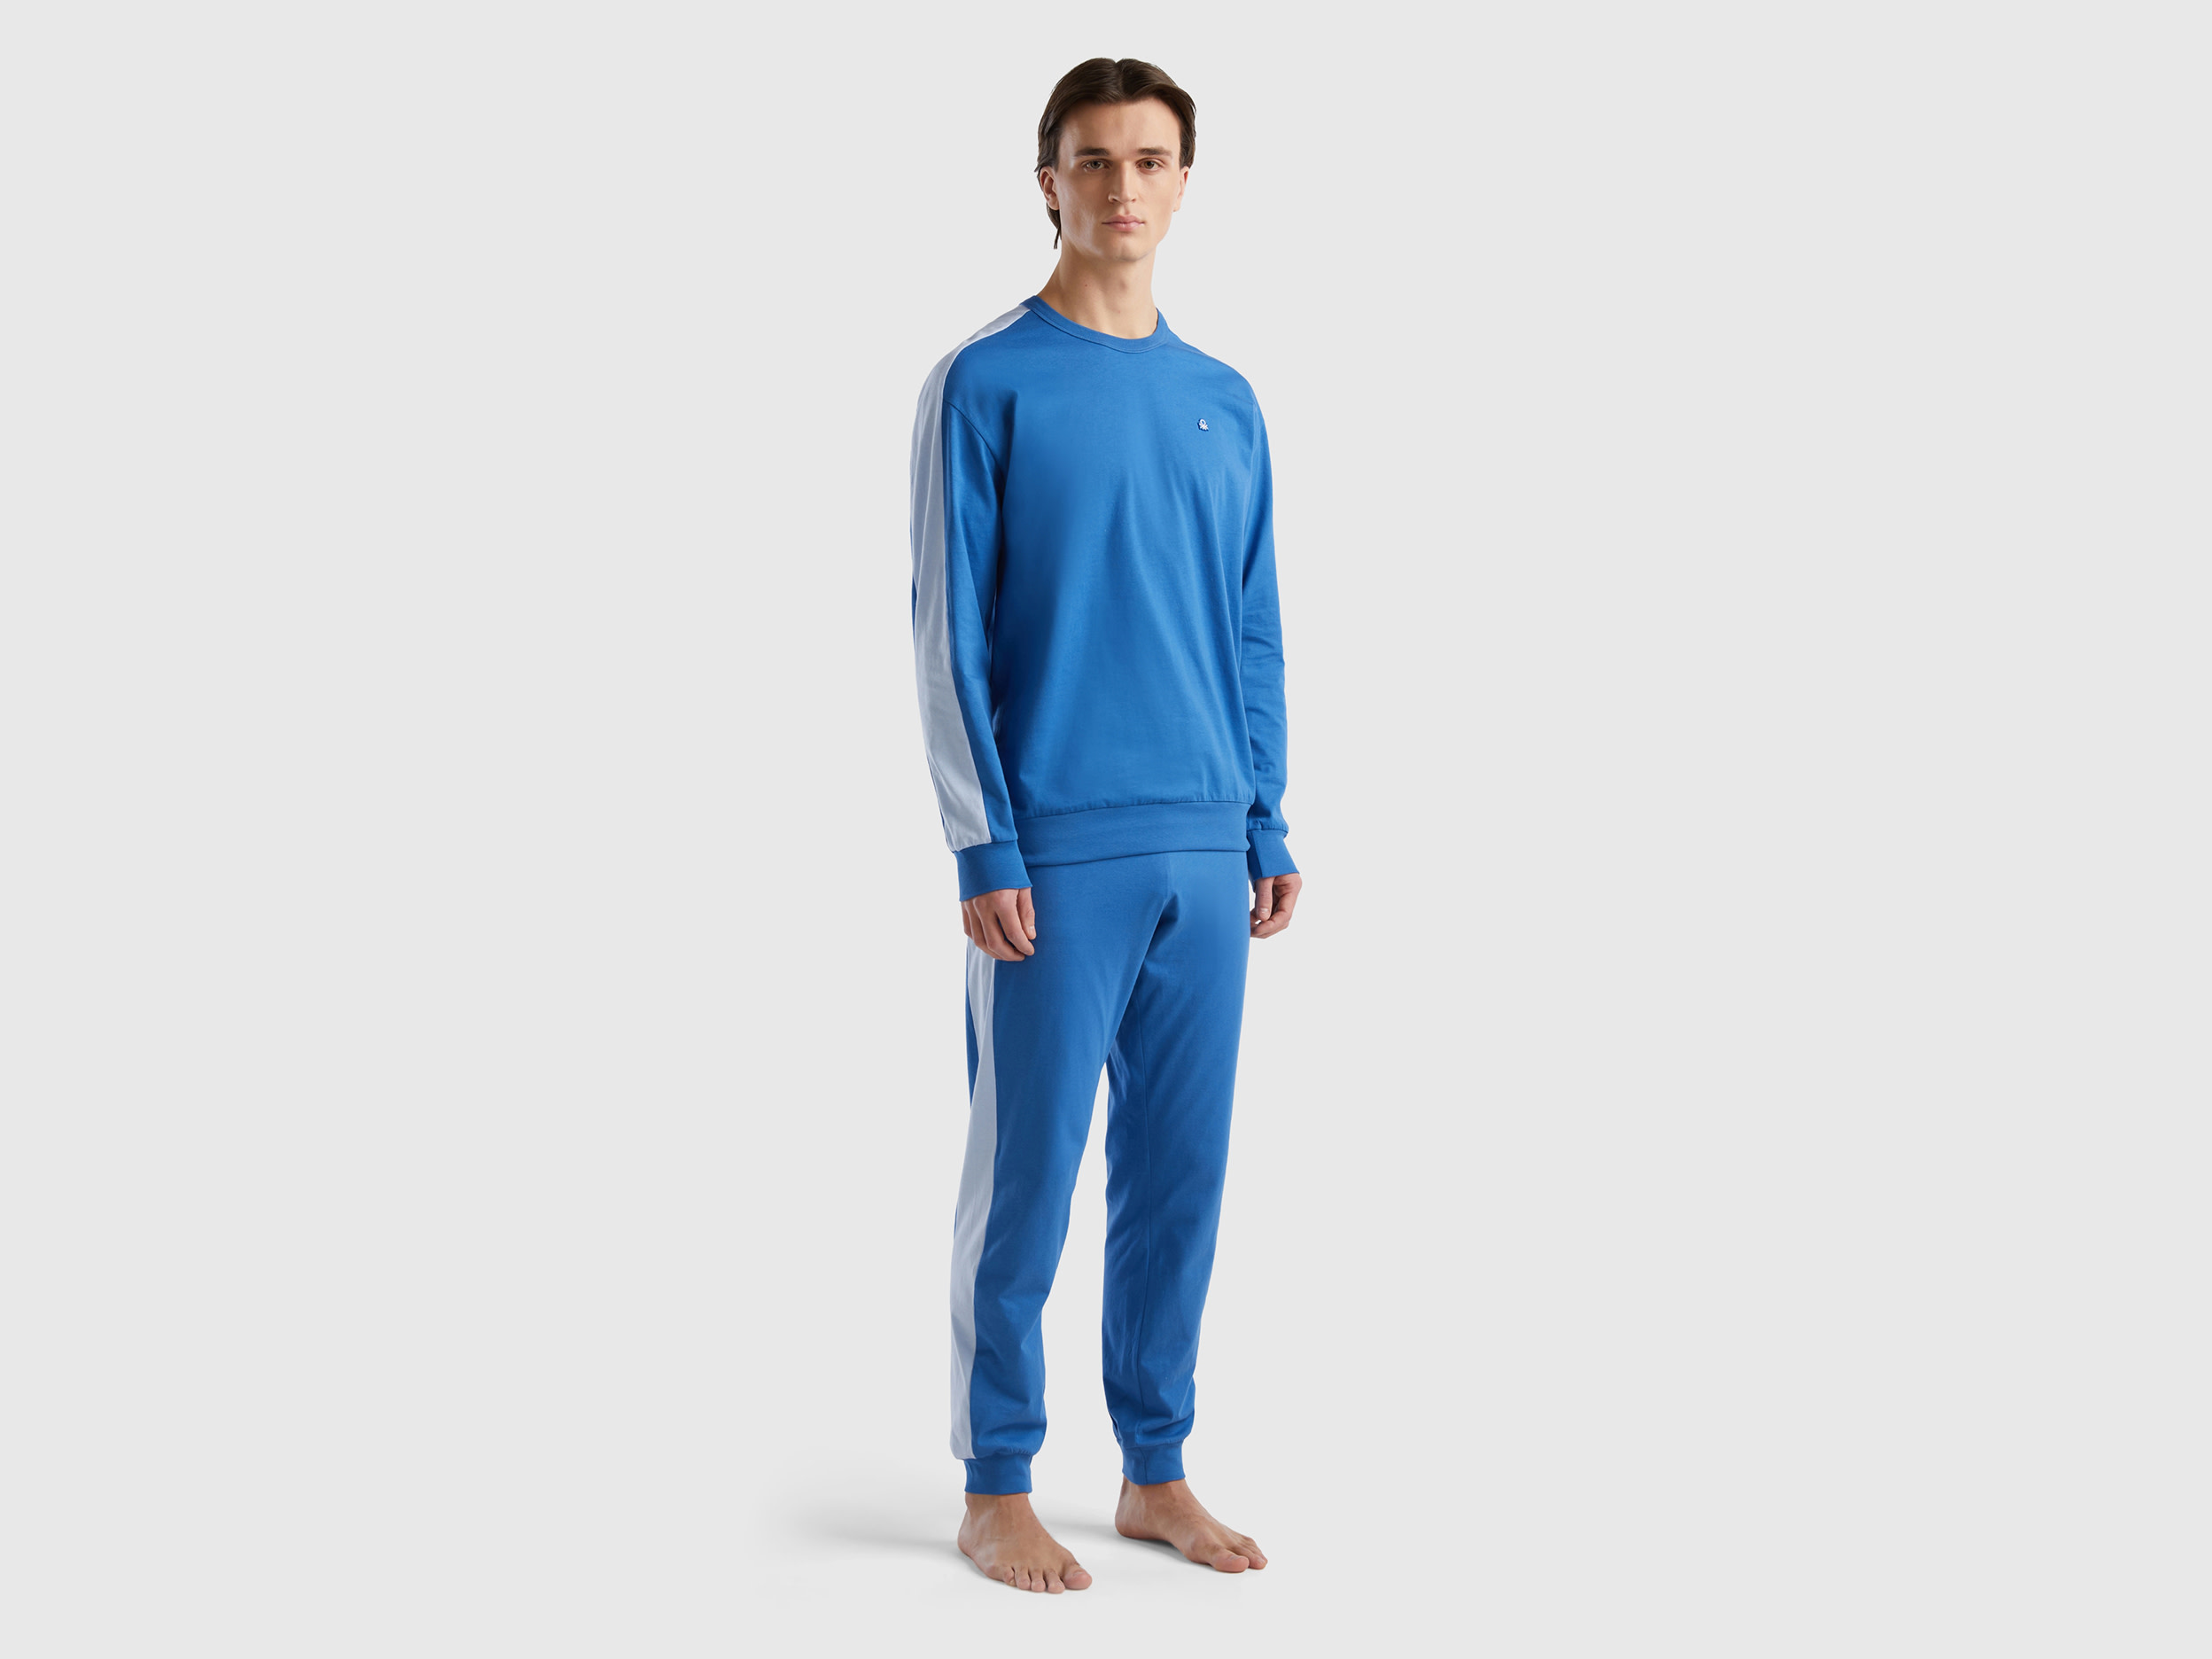 Benetton, Pyjamas With Side Stripes, size XL, Blue, Men